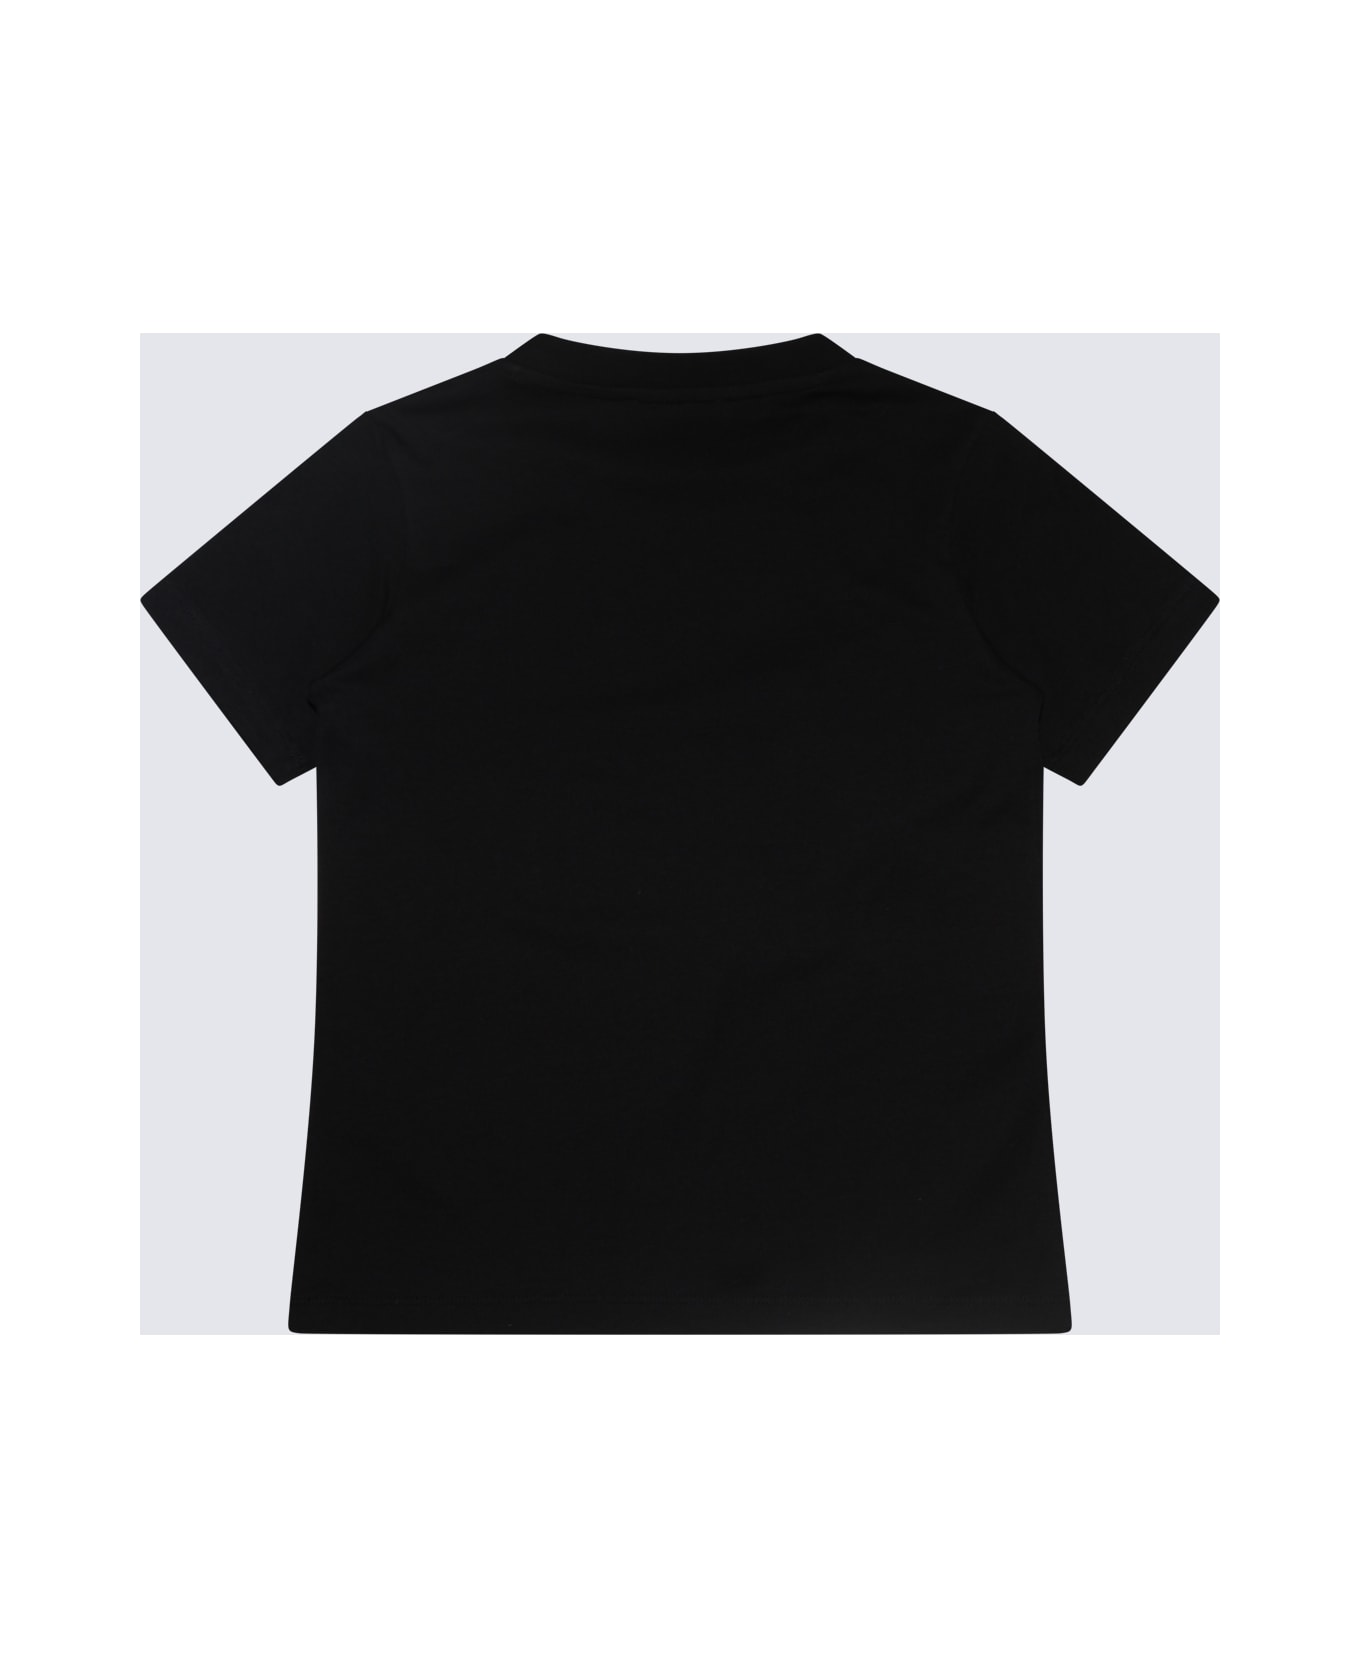 Balmain Black And White Cotton T-shirt - Black